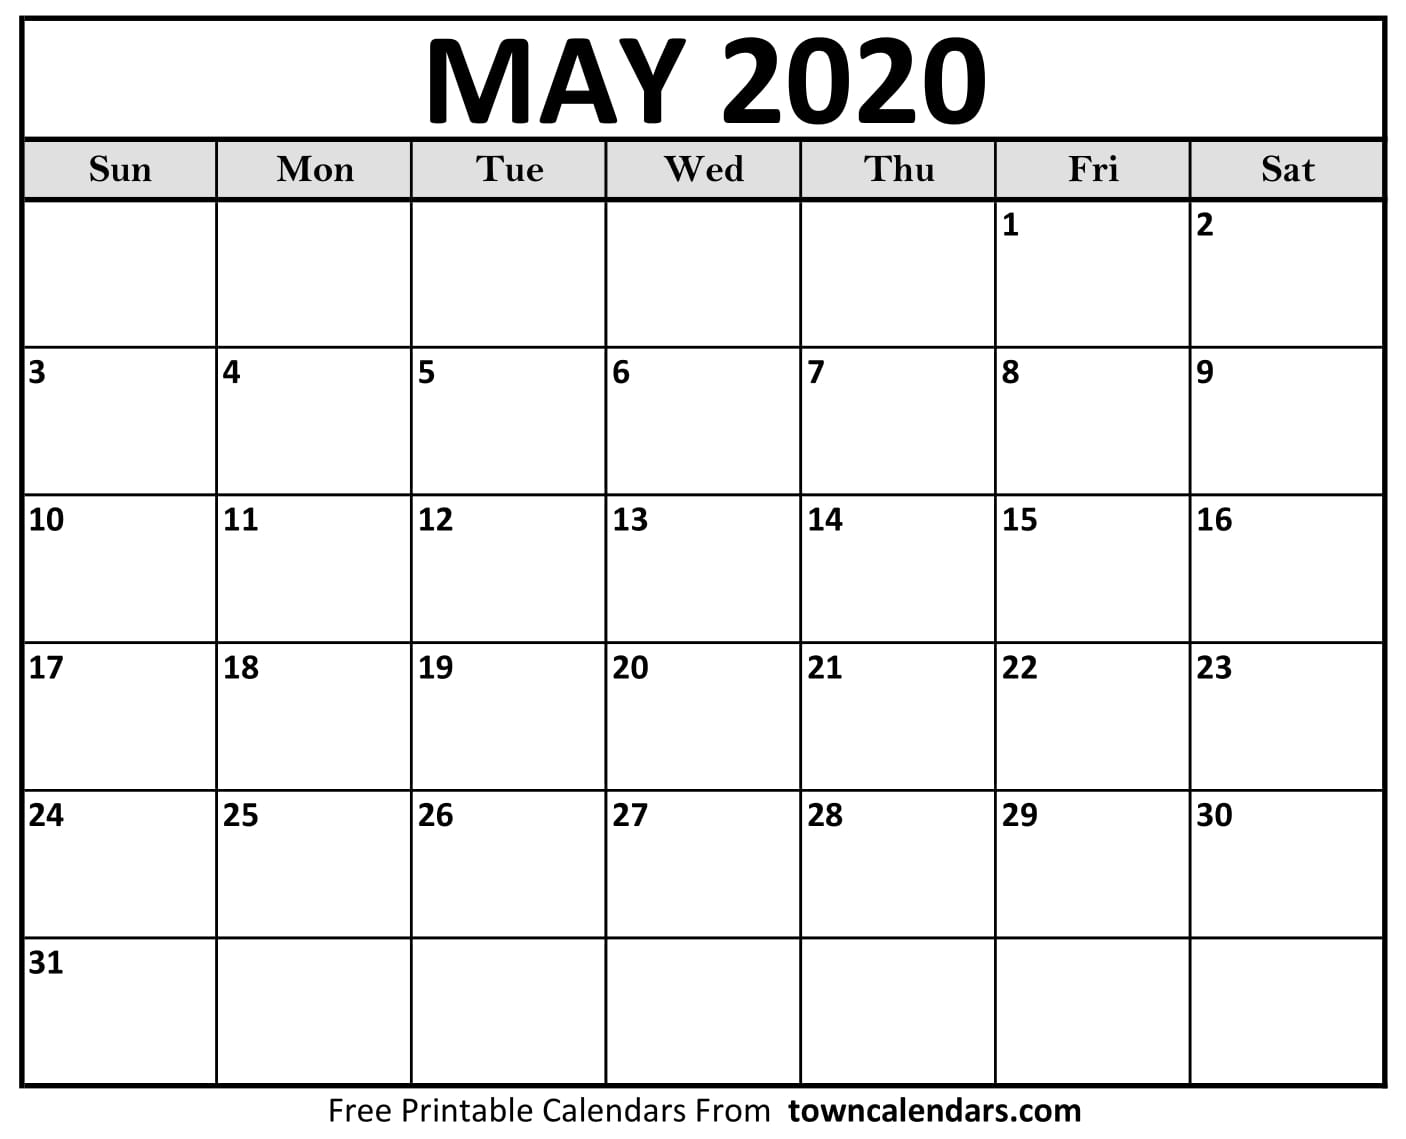 Printable May 2020 Calendar - Towncalendars